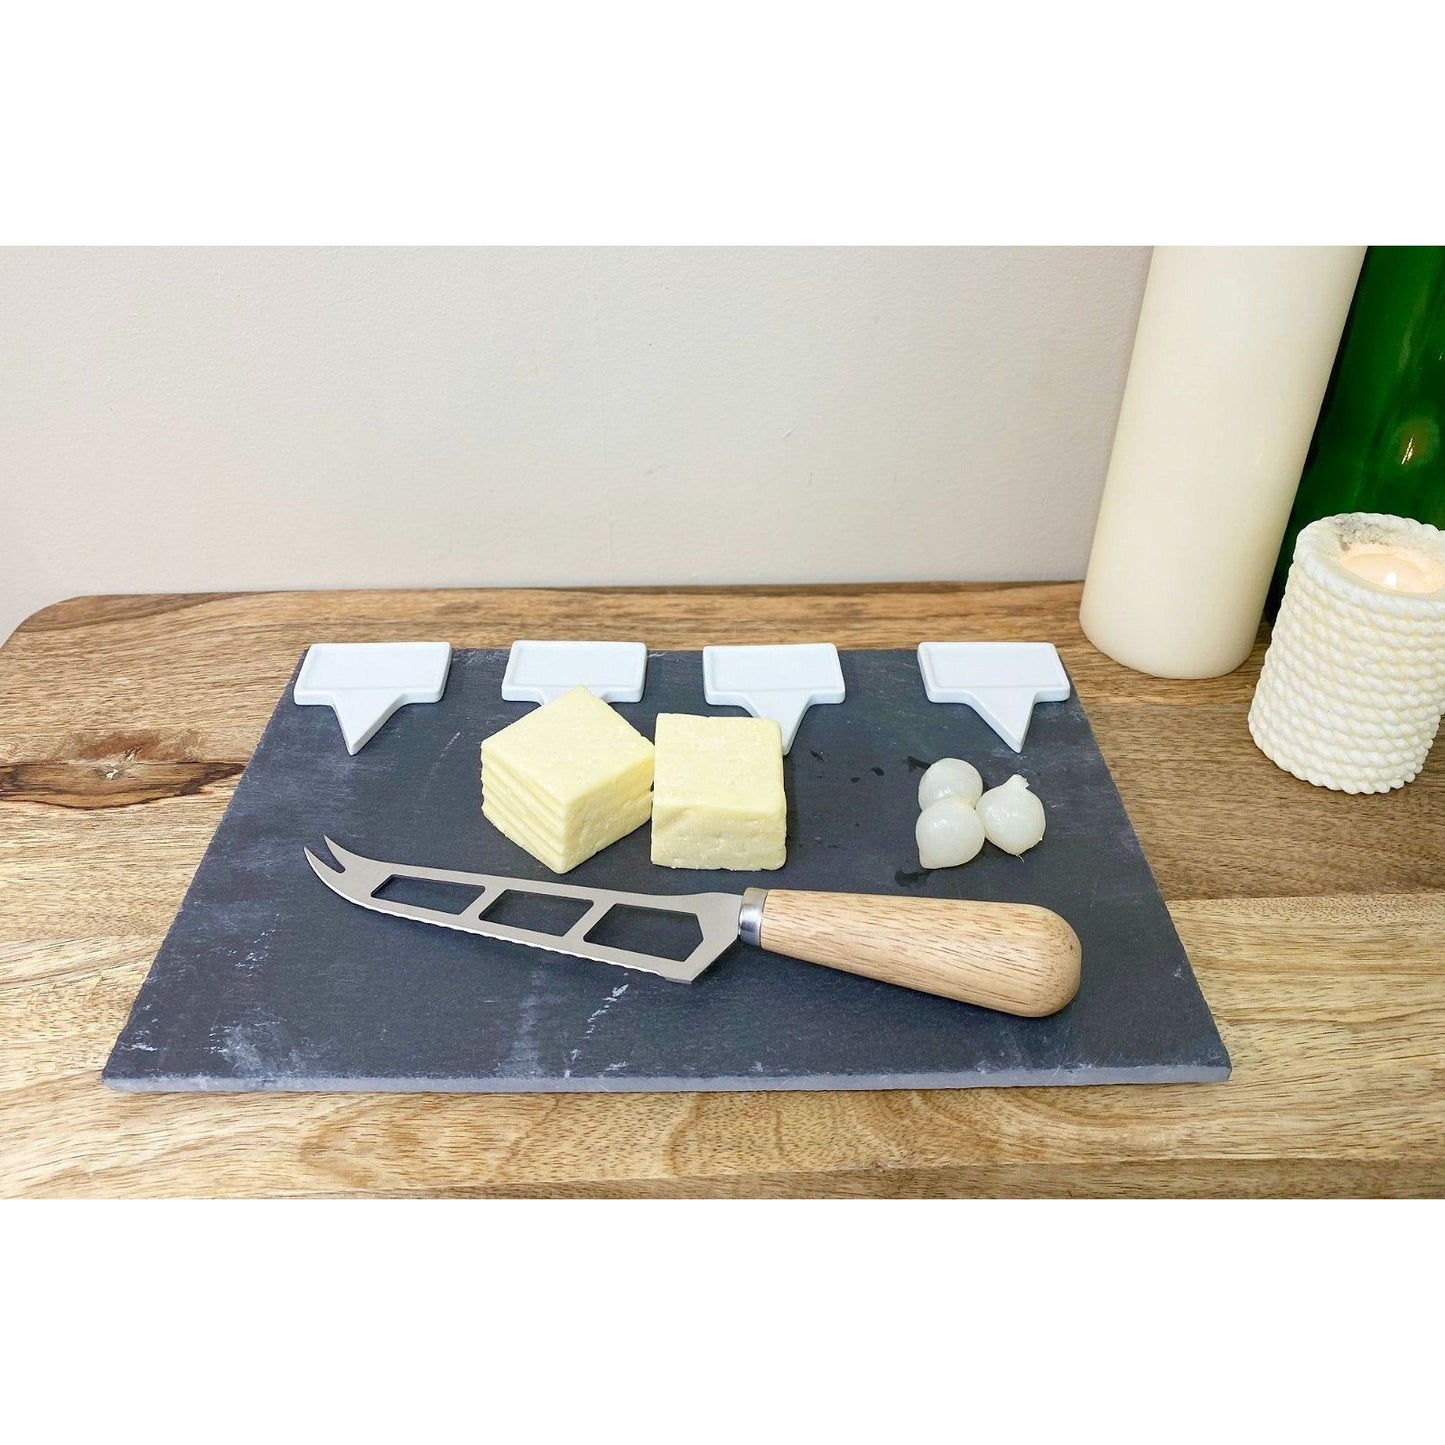 Slate Cheese Board Service Set & Knife 30cm - Ashton and Finch